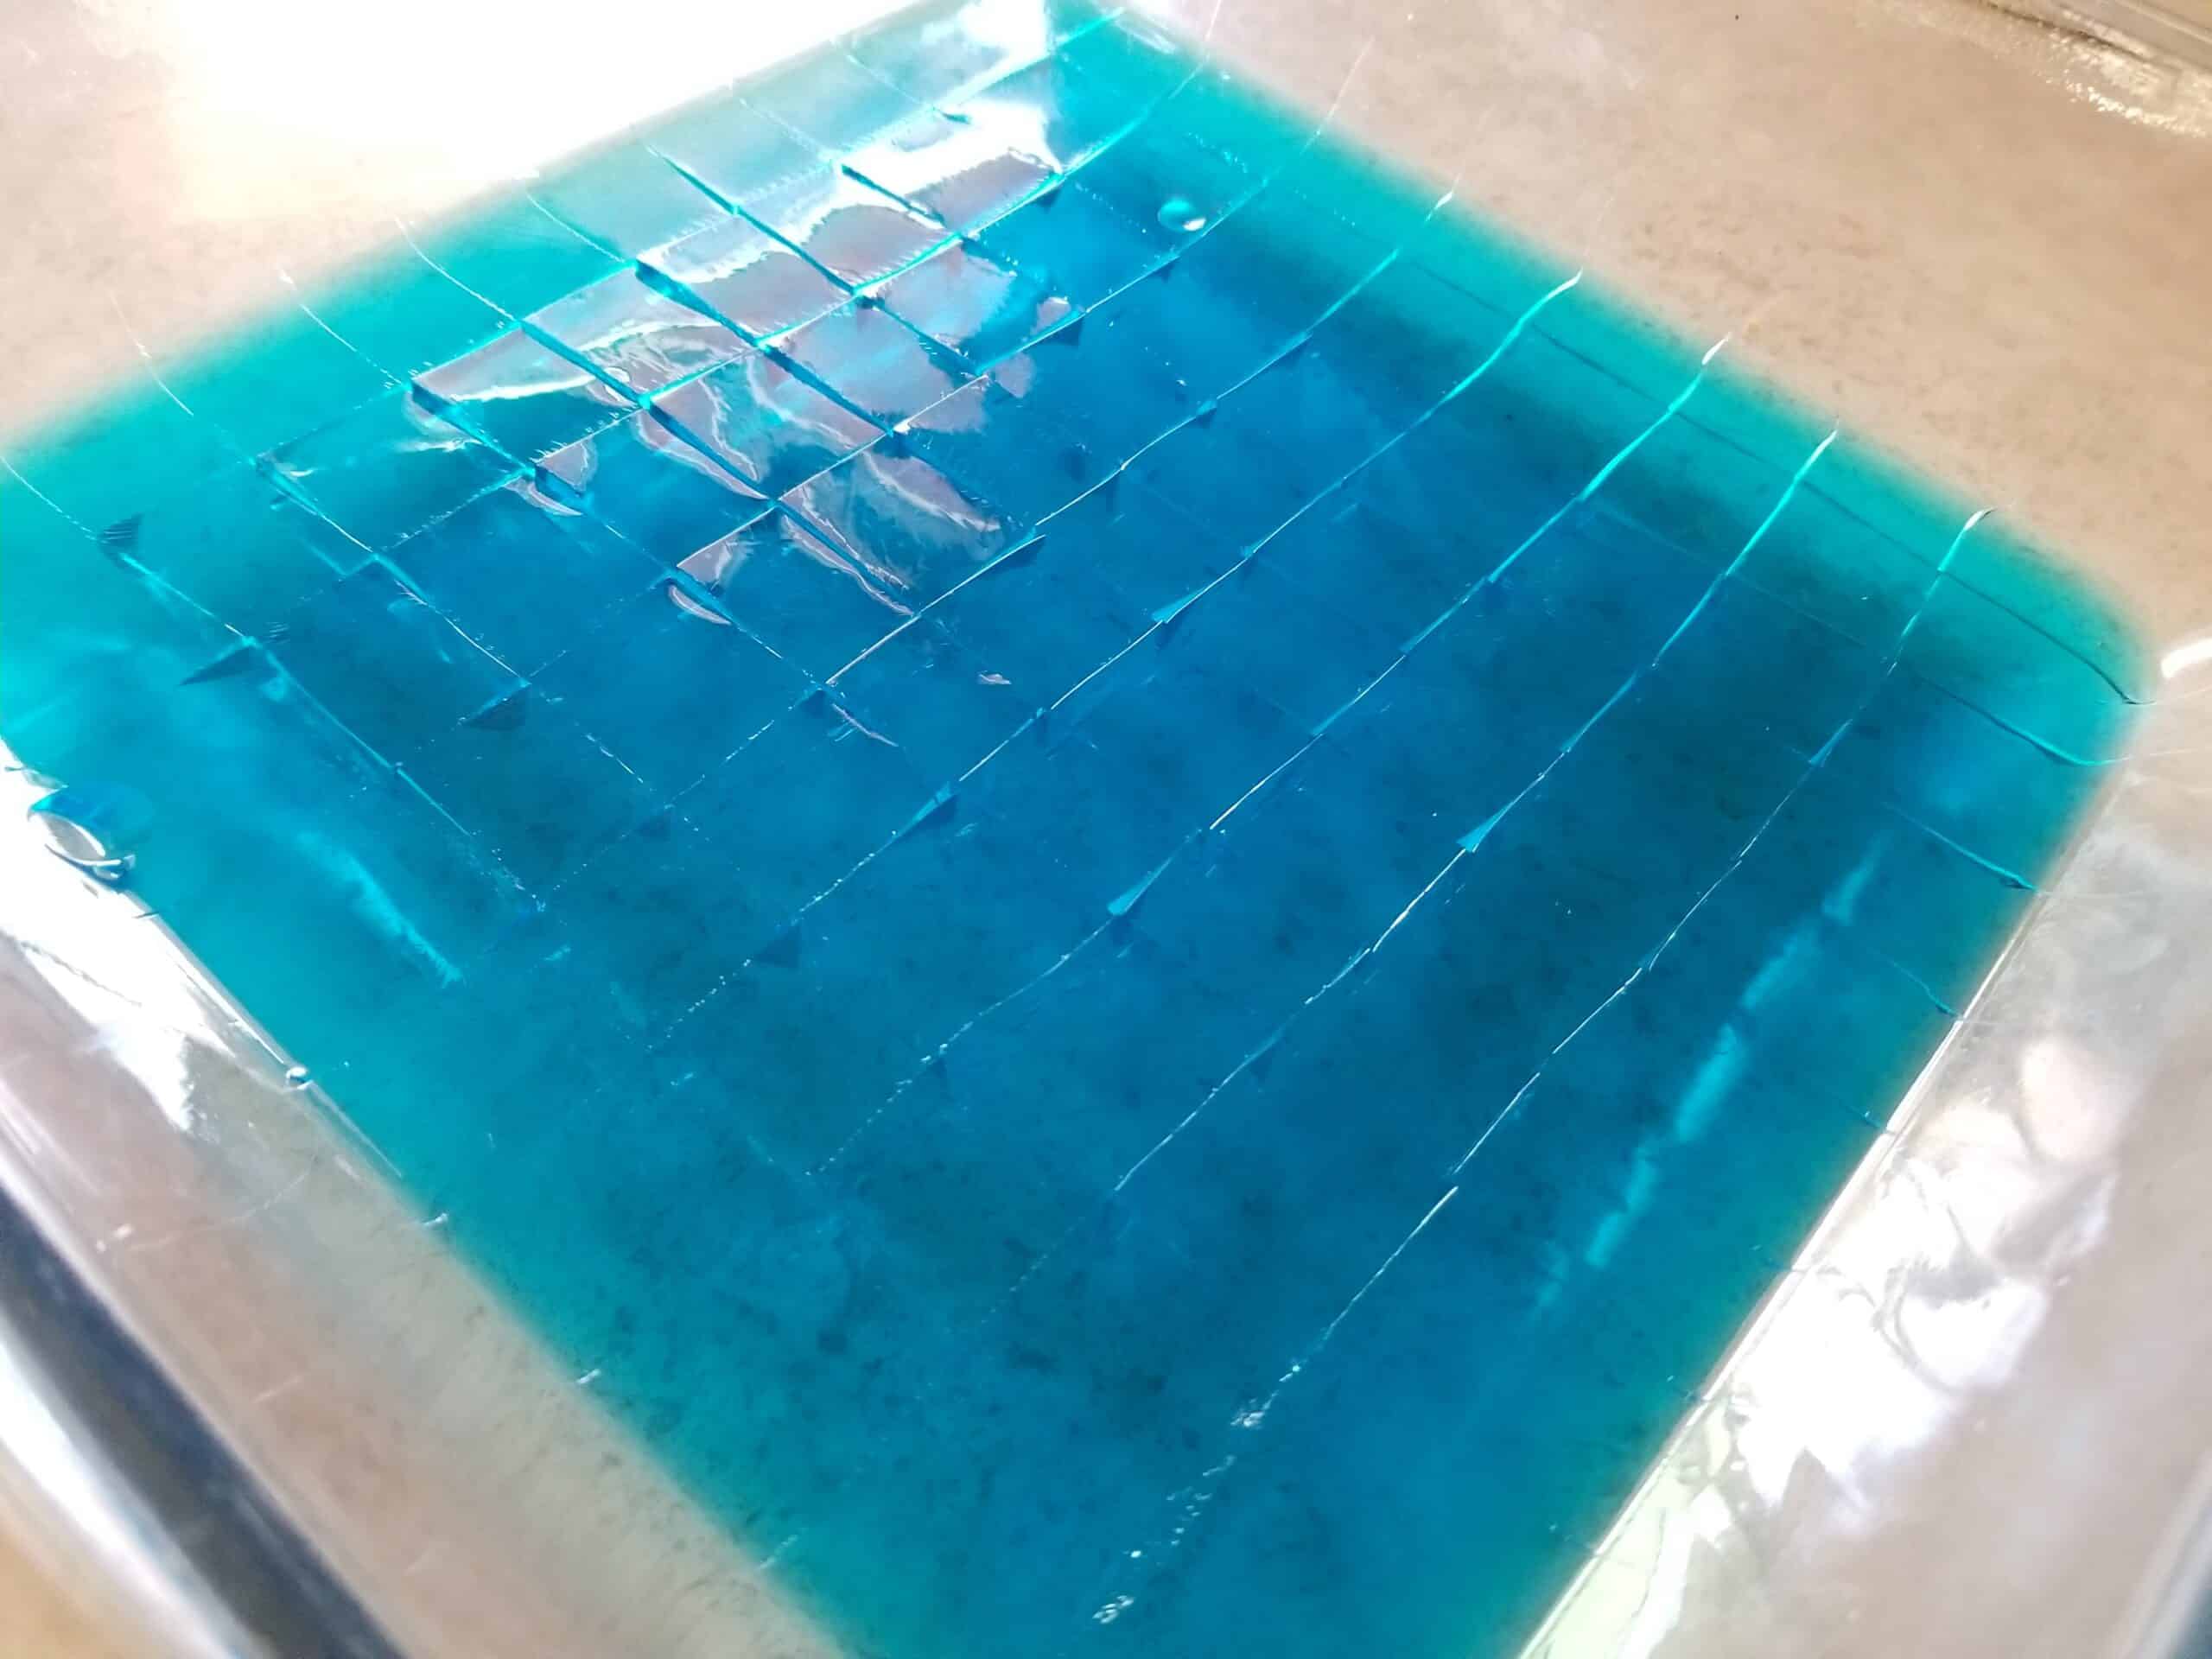 blue jello squares cut in cubes